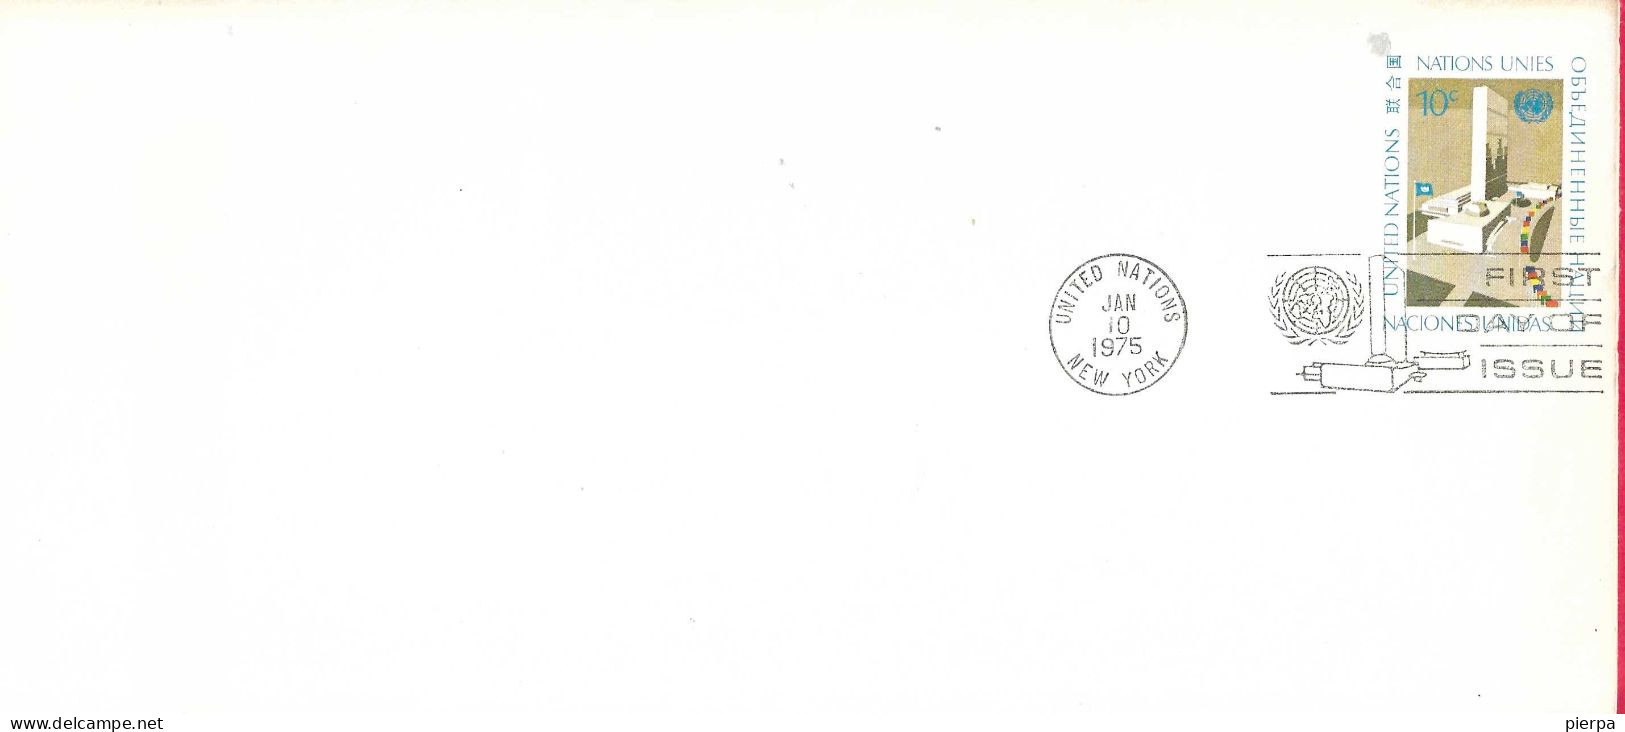 O.N.U. - 1975 - INTERO BUSTA POSTALE CENT. 10 - ANNULLO A TARGHETTA F.D.C*JAN 10, 1975*- FORMATO COMMERCIALE - Cartas & Documentos